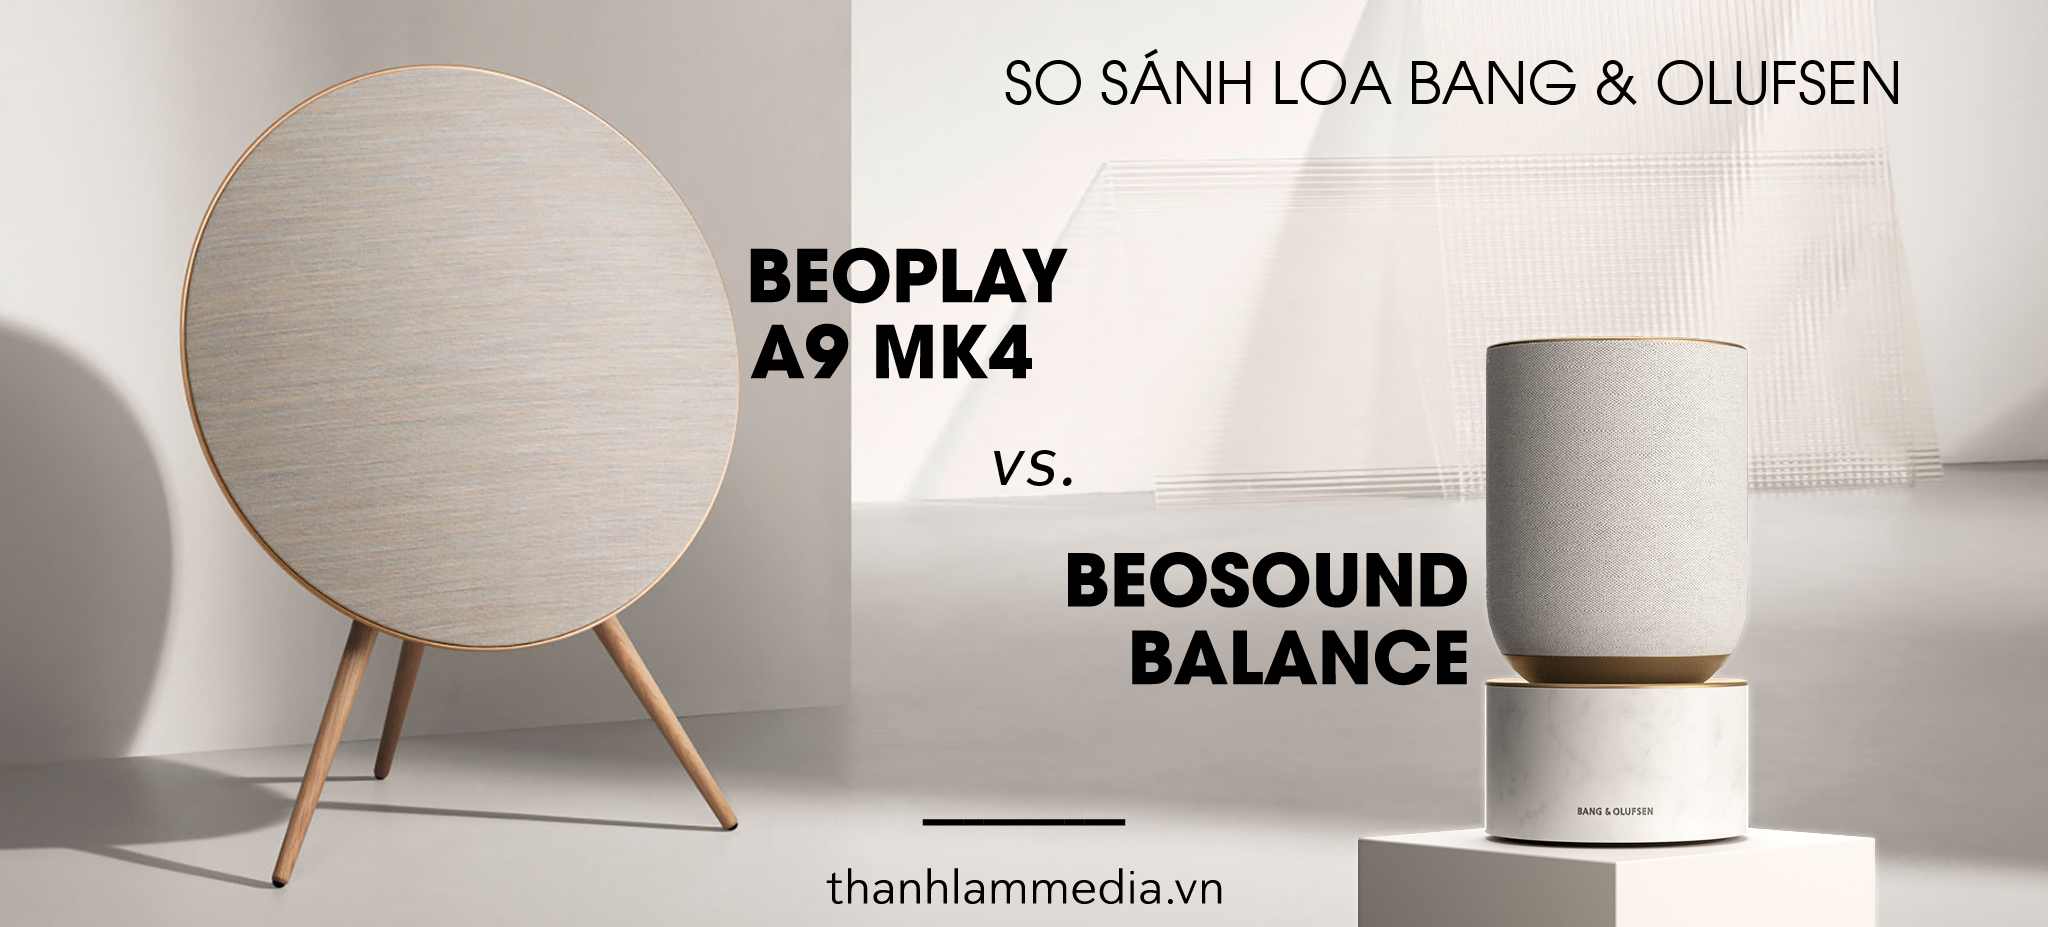 So sánh hai mẫu loa Bang & Olufsen: Beoplay A9 MK4 vs Beosound Balance 52